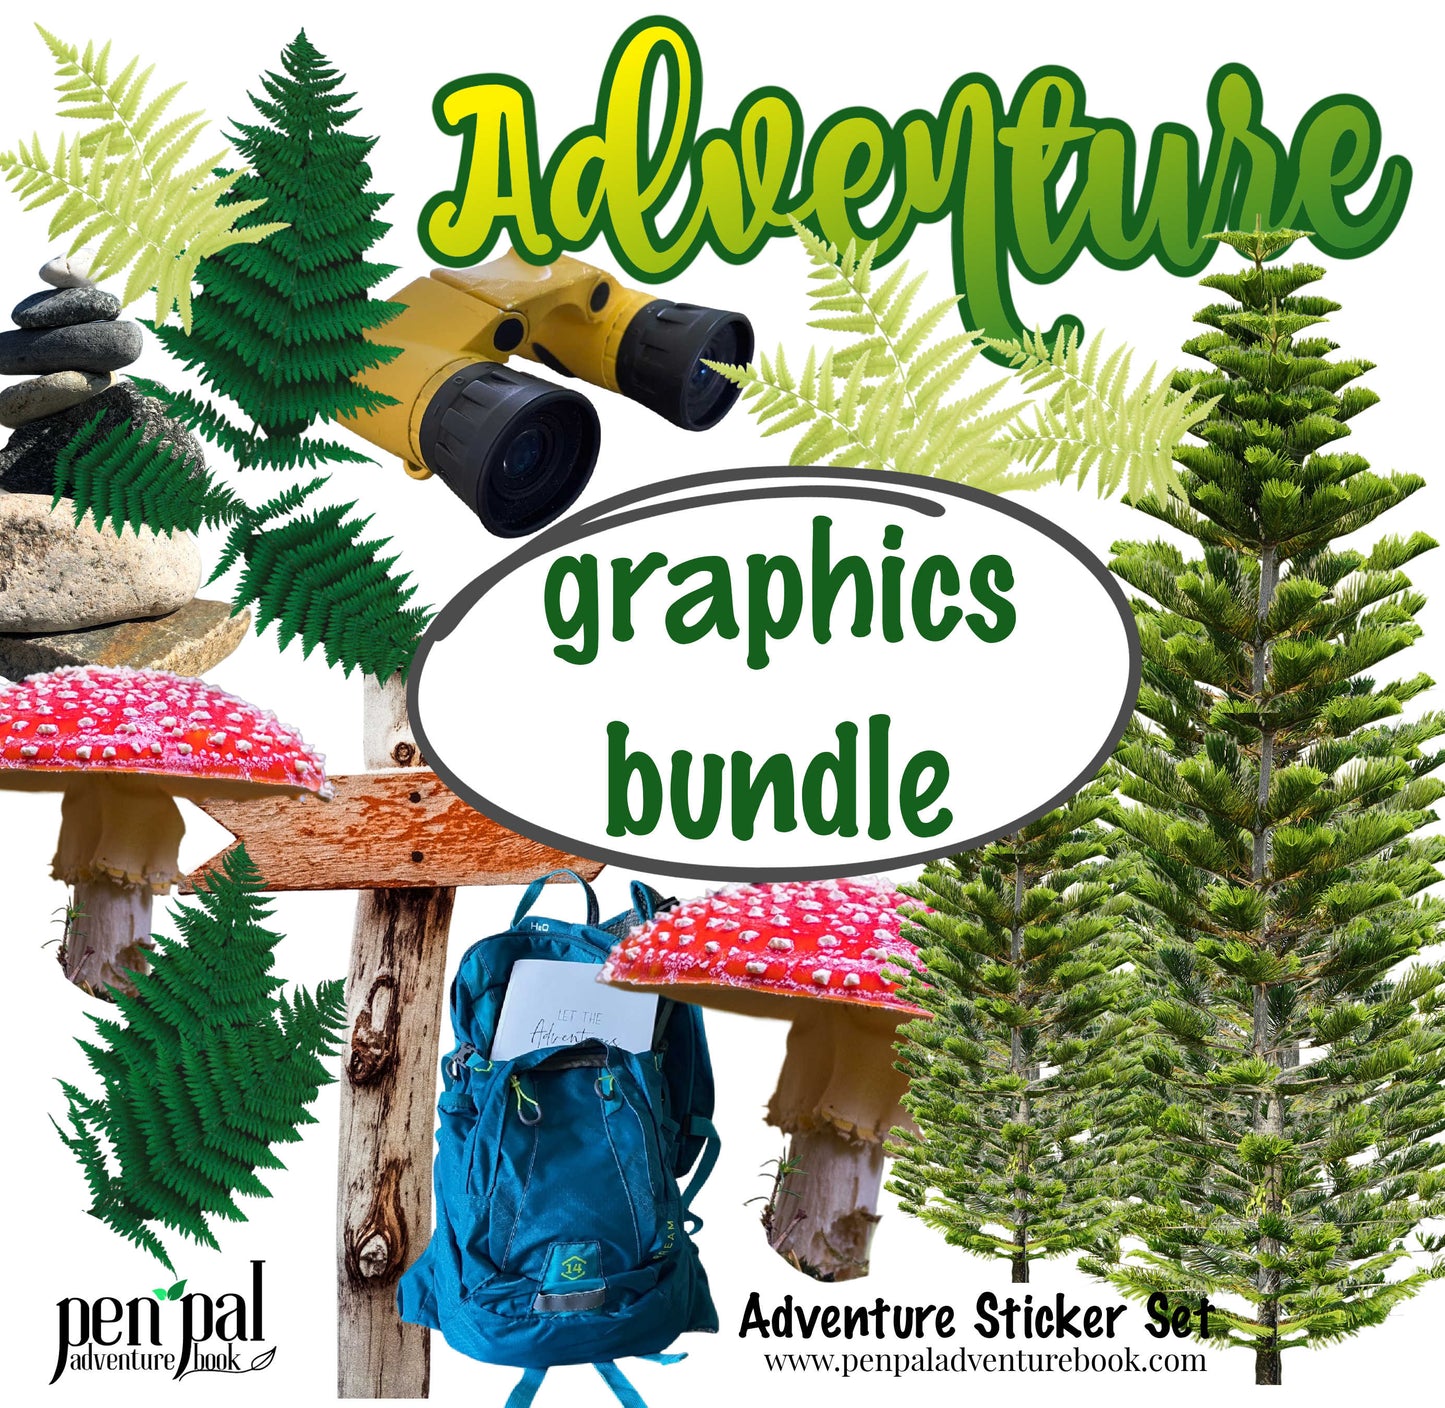 Digital Pen Pal Adventure Book - Adventure Hiking Themed Graphics - Eco-friendly Adventure Sharing